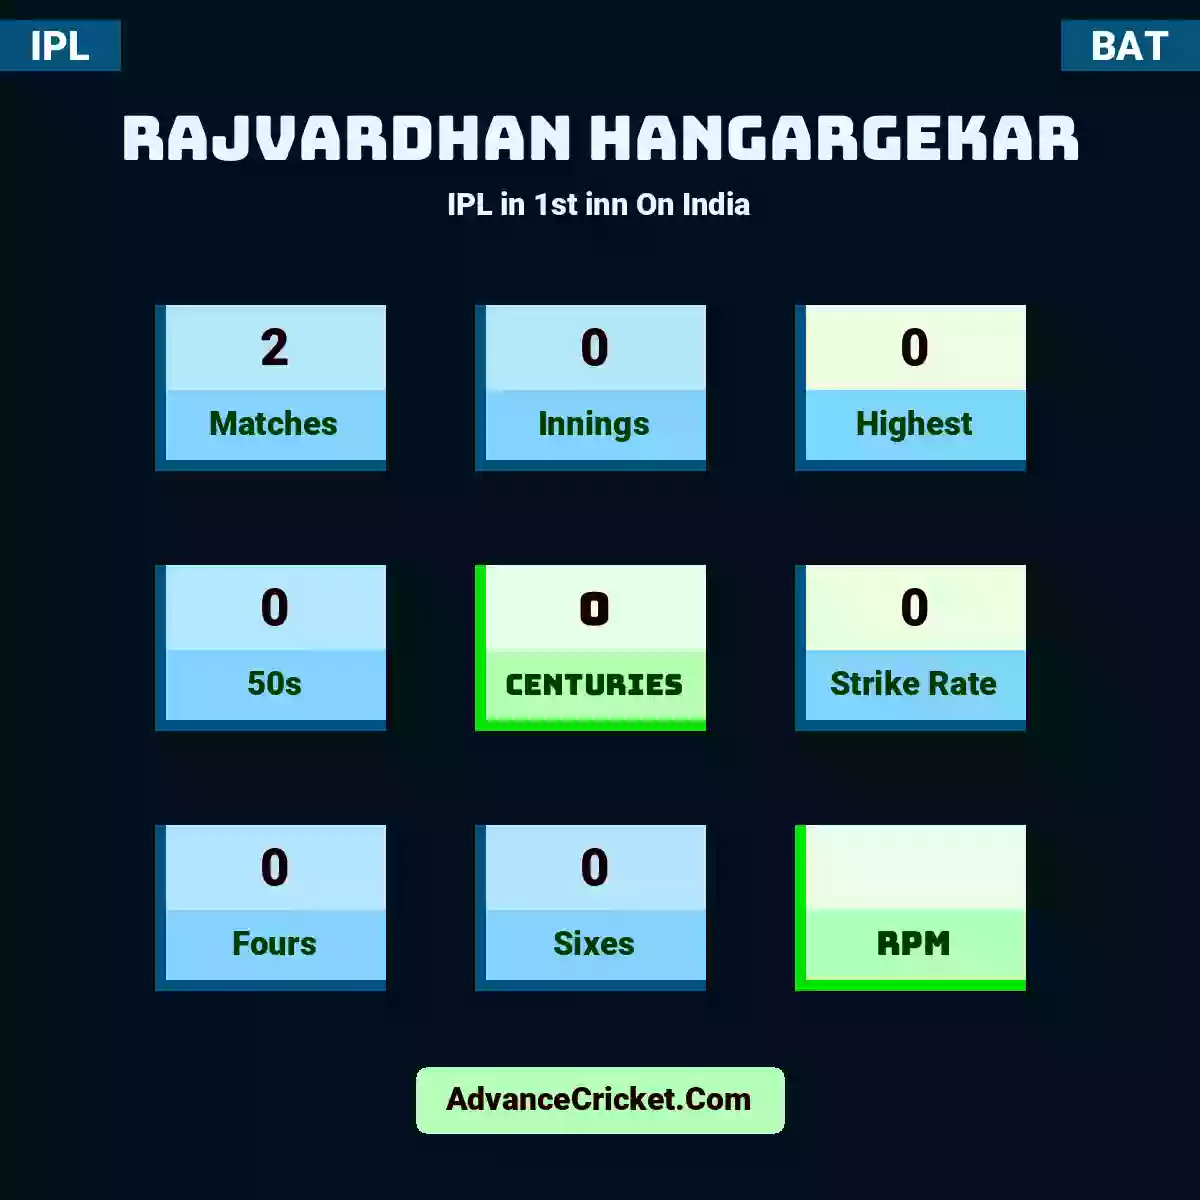 Rajvardhan Hangargekar IPL  in 1st inn On India, Rajvardhan Hangargekar played 2 matches, scored 0 runs as highest, 0 half-centuries, and 0 centuries, with a strike rate of 0. R.Hangargekar hit 0 fours and 0 sixes.